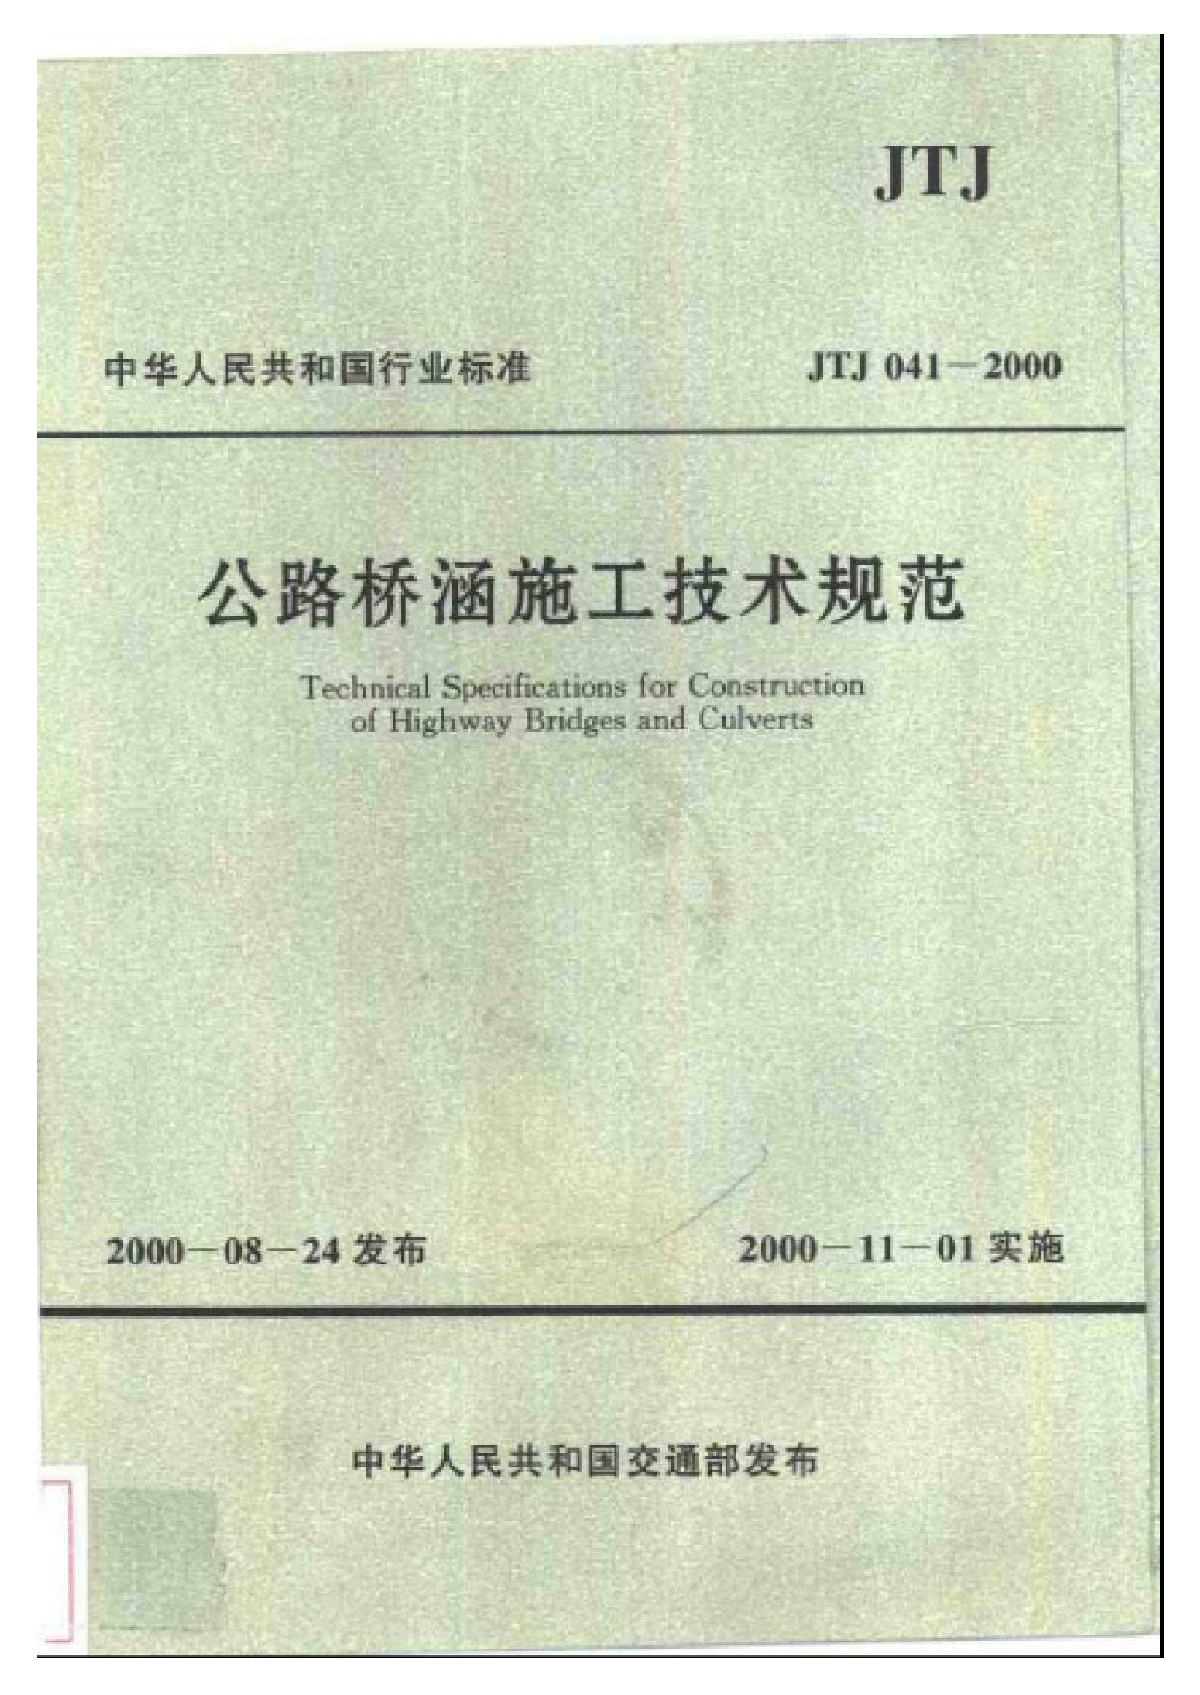  JTJ 041-2000 Technical Specification for Construction of Highway Bridges - Figure 1